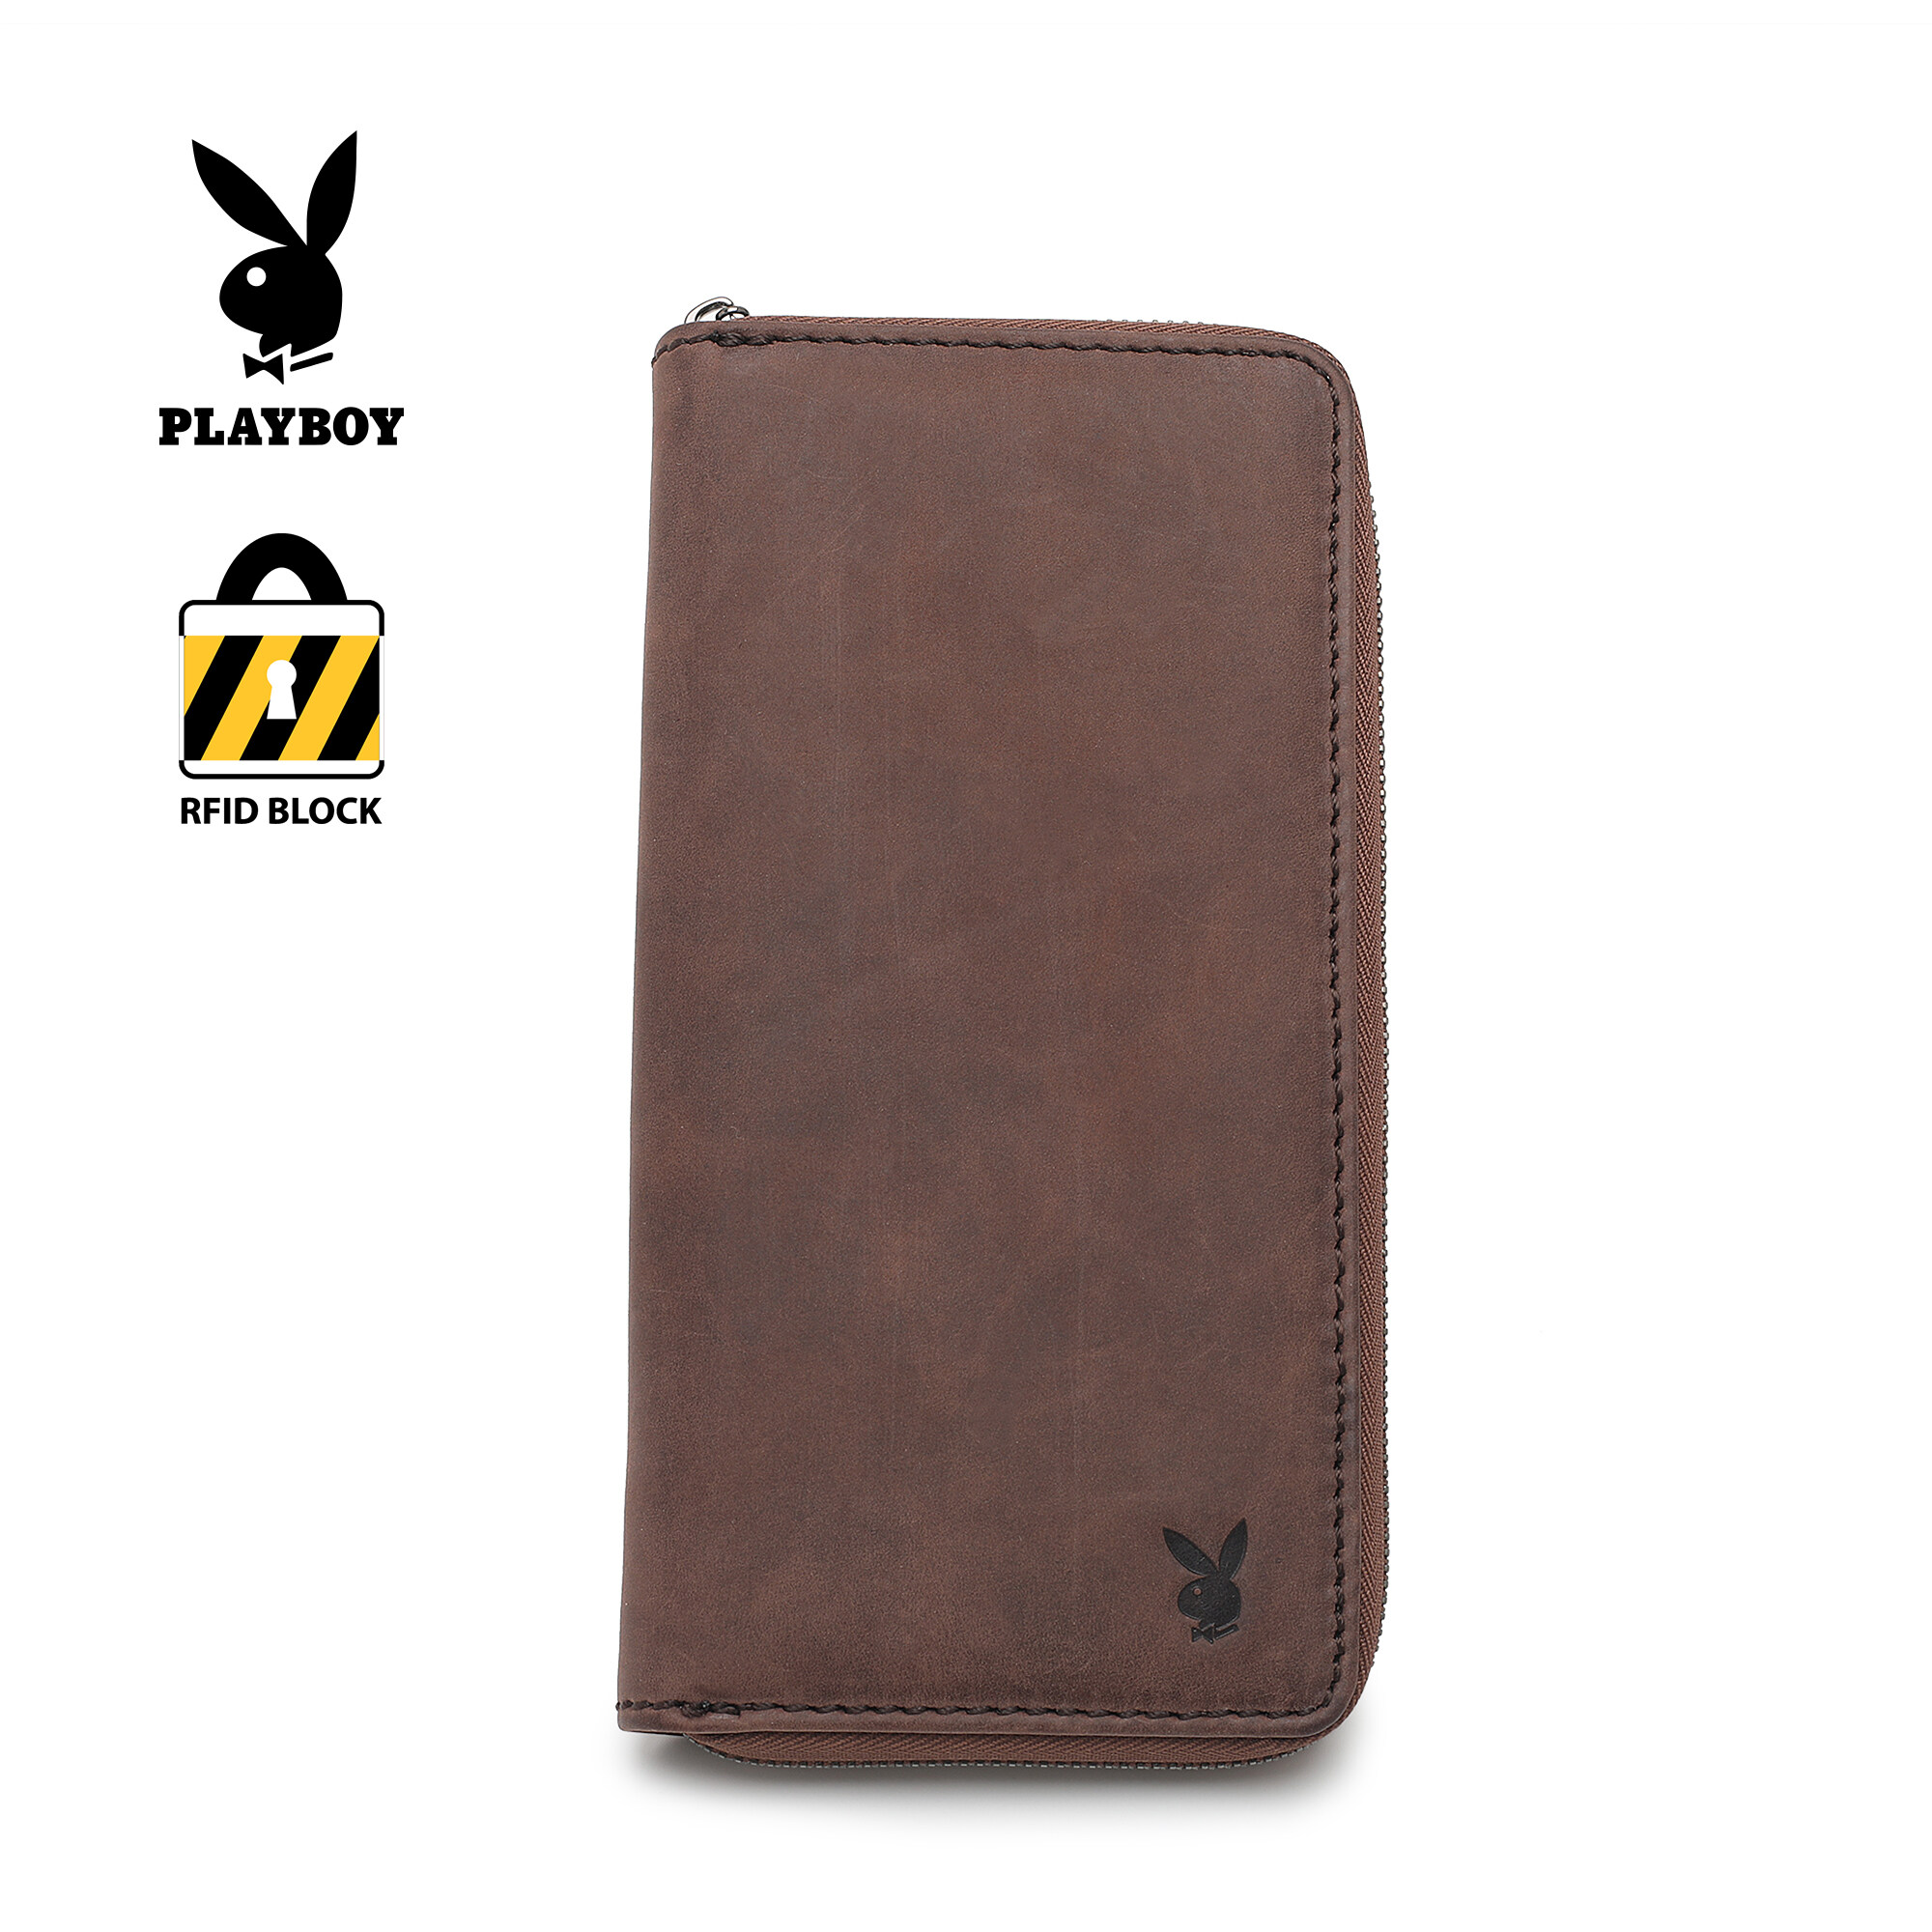 PLAYBOY Genuine Leather Long Wallet / Zipper Long Wallet / Bifold Wallet PW 267 Brown